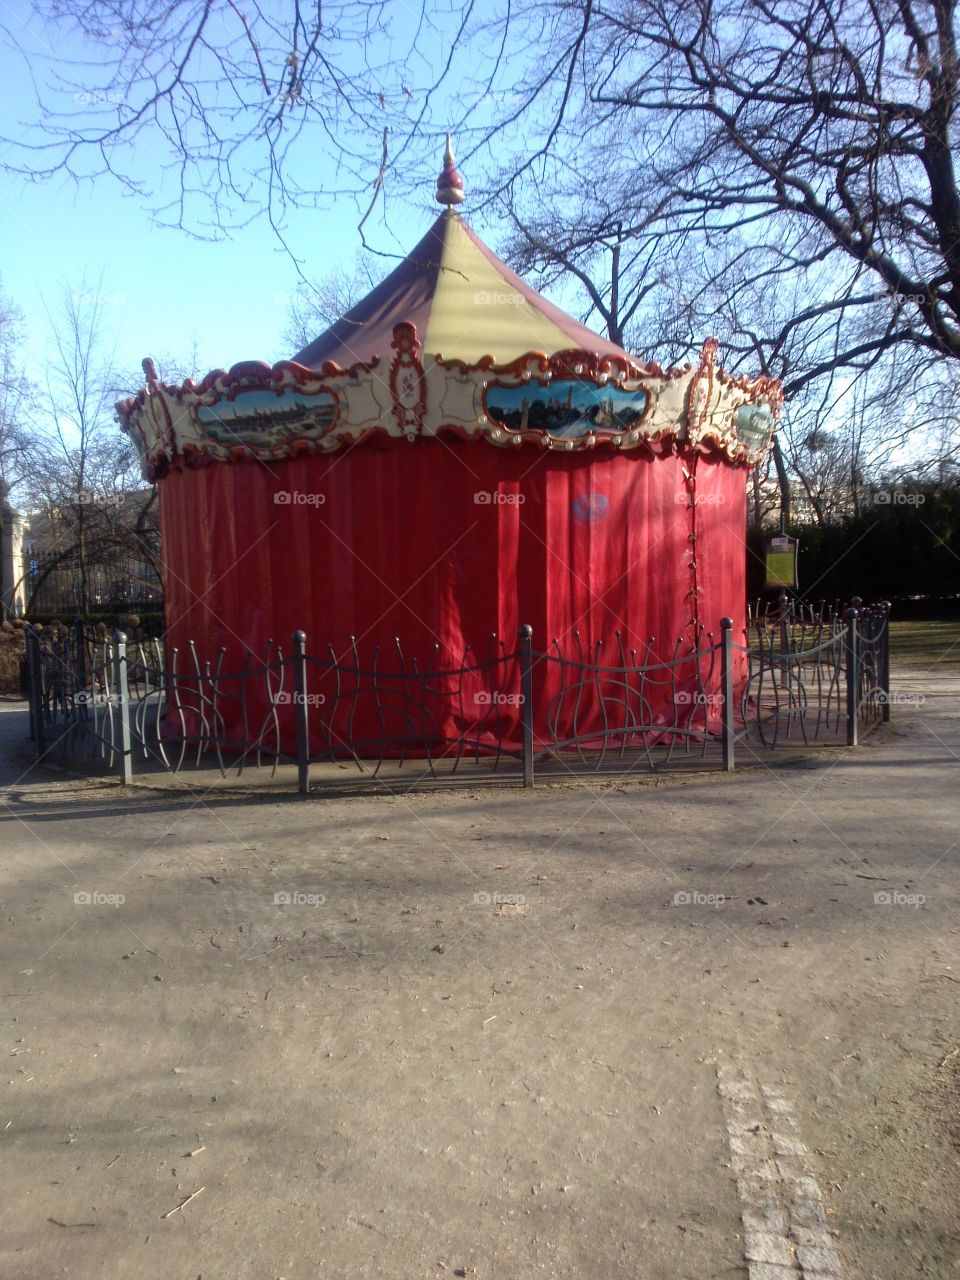 carousel ready for summer